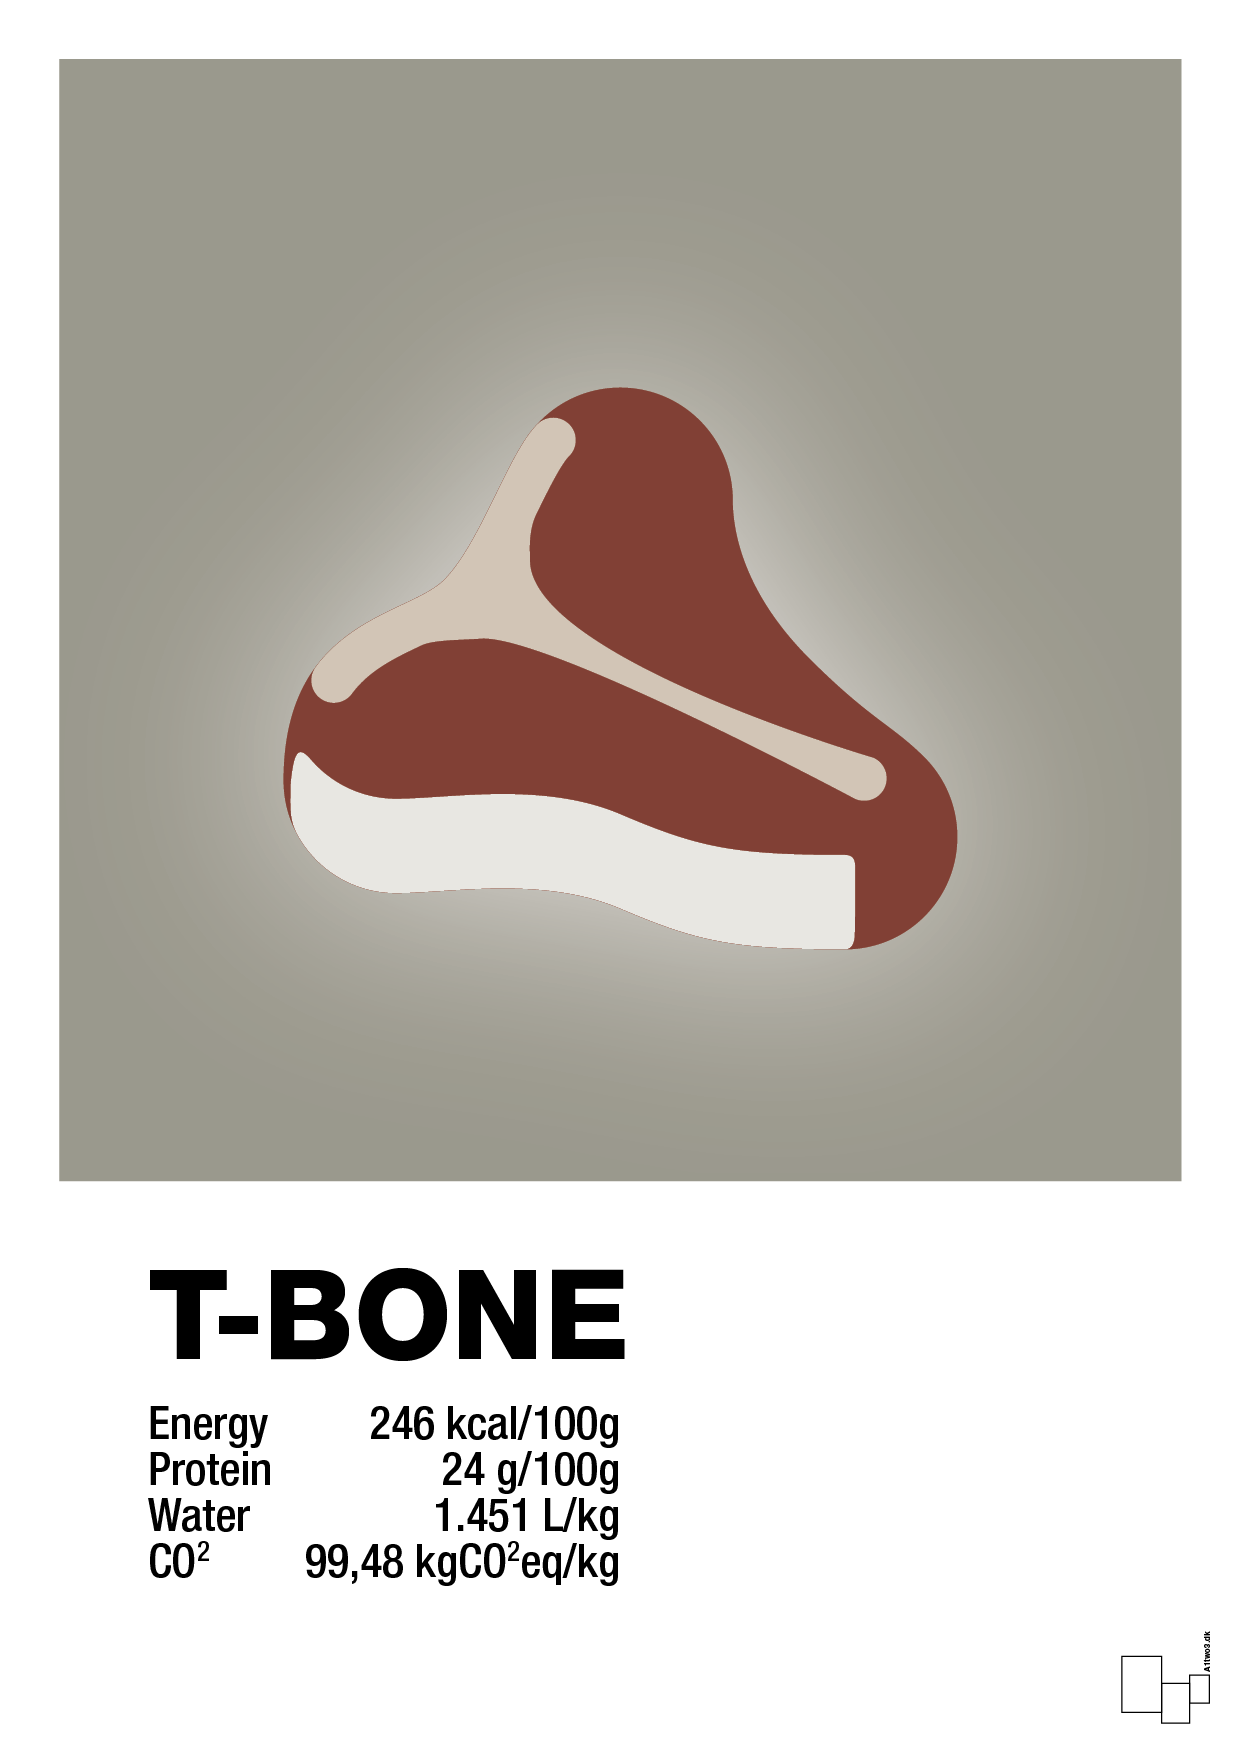 t-bone nutrition og miljø - Plakat med Mad & Drikke i Battleship Gray